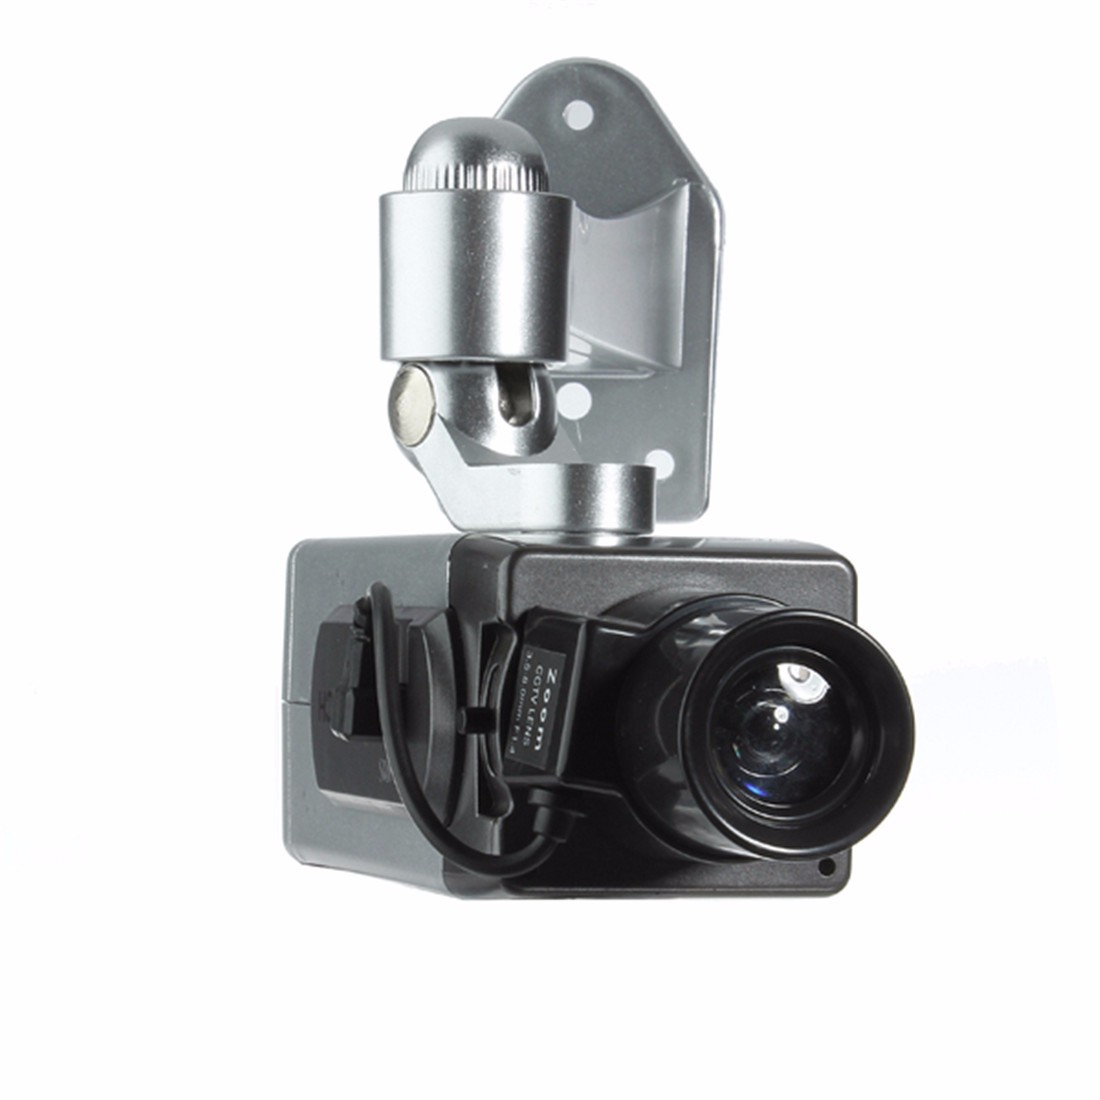 In/Outdoor Dummy Fake LED Flashing Security Camera CCTV Surveillance Imitation 13